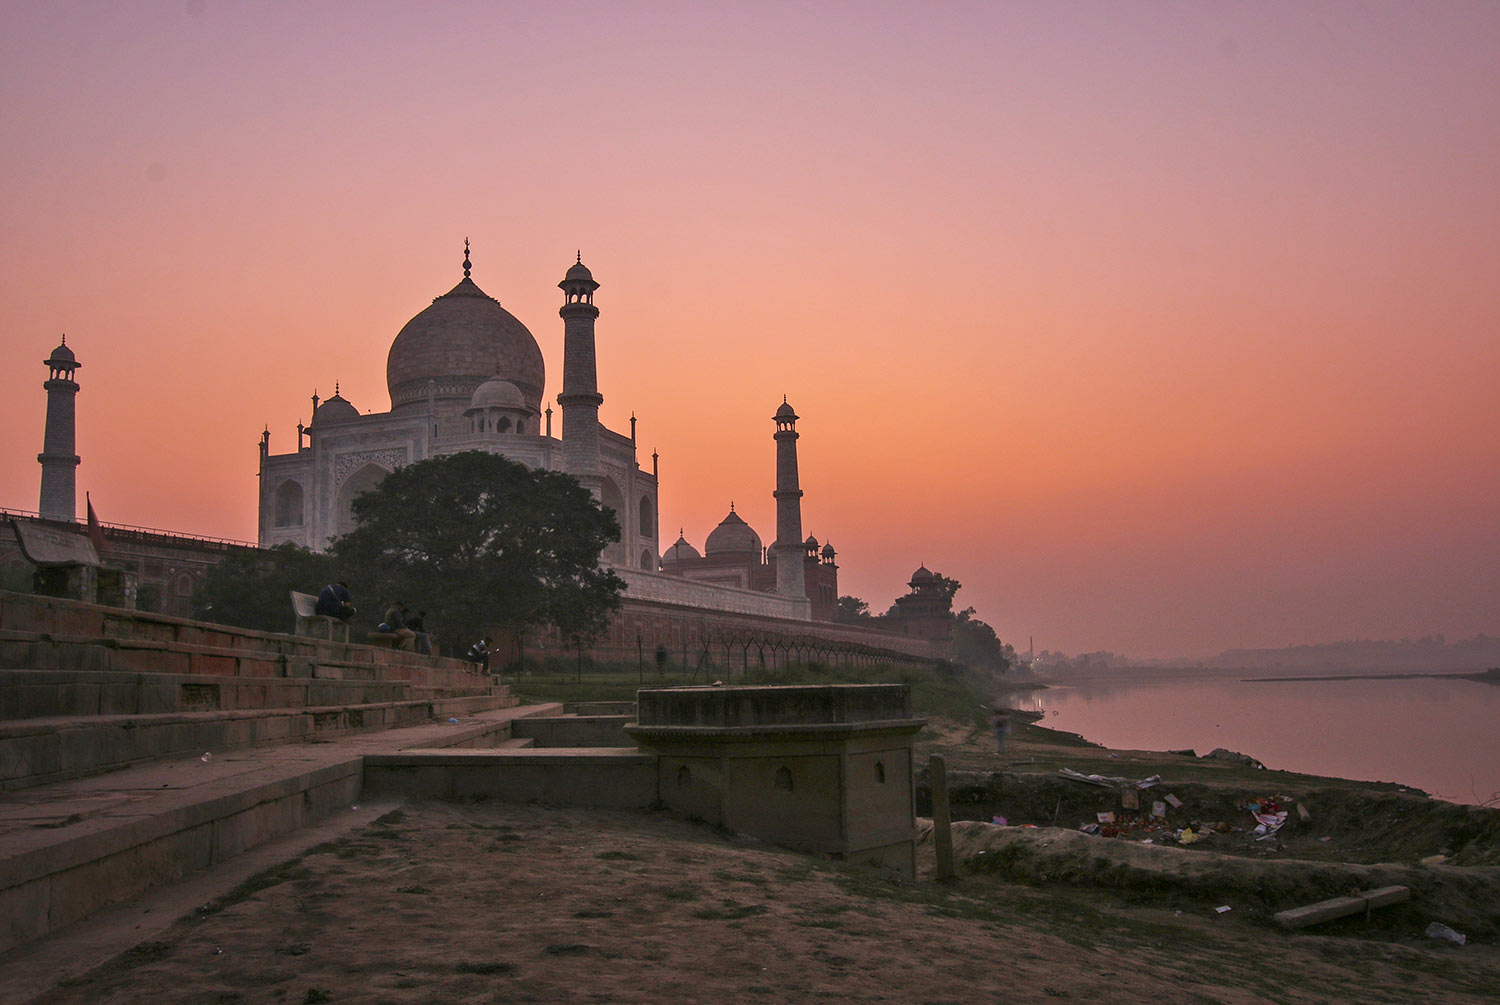 Rivière, Taj Mahal, Agra, Inde / River, Taj Mahal, Agra, India